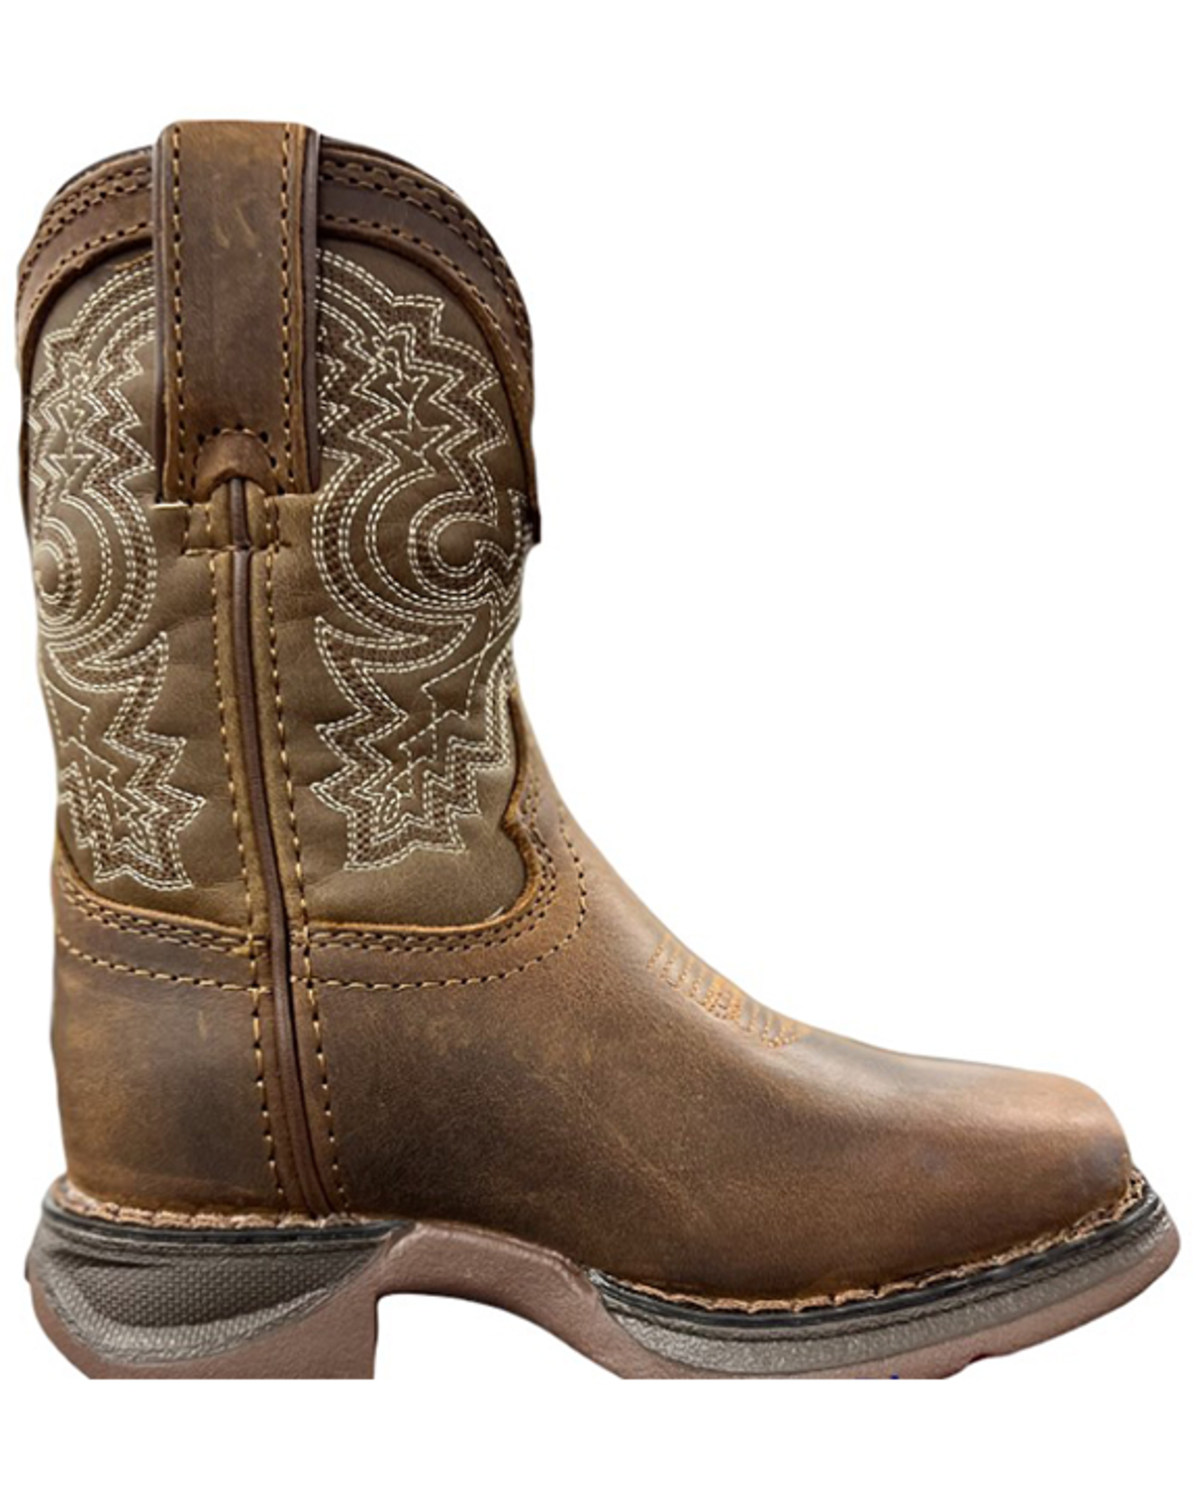 Durango Boys' Lil Rebel Western Boots - Broad Square Toe